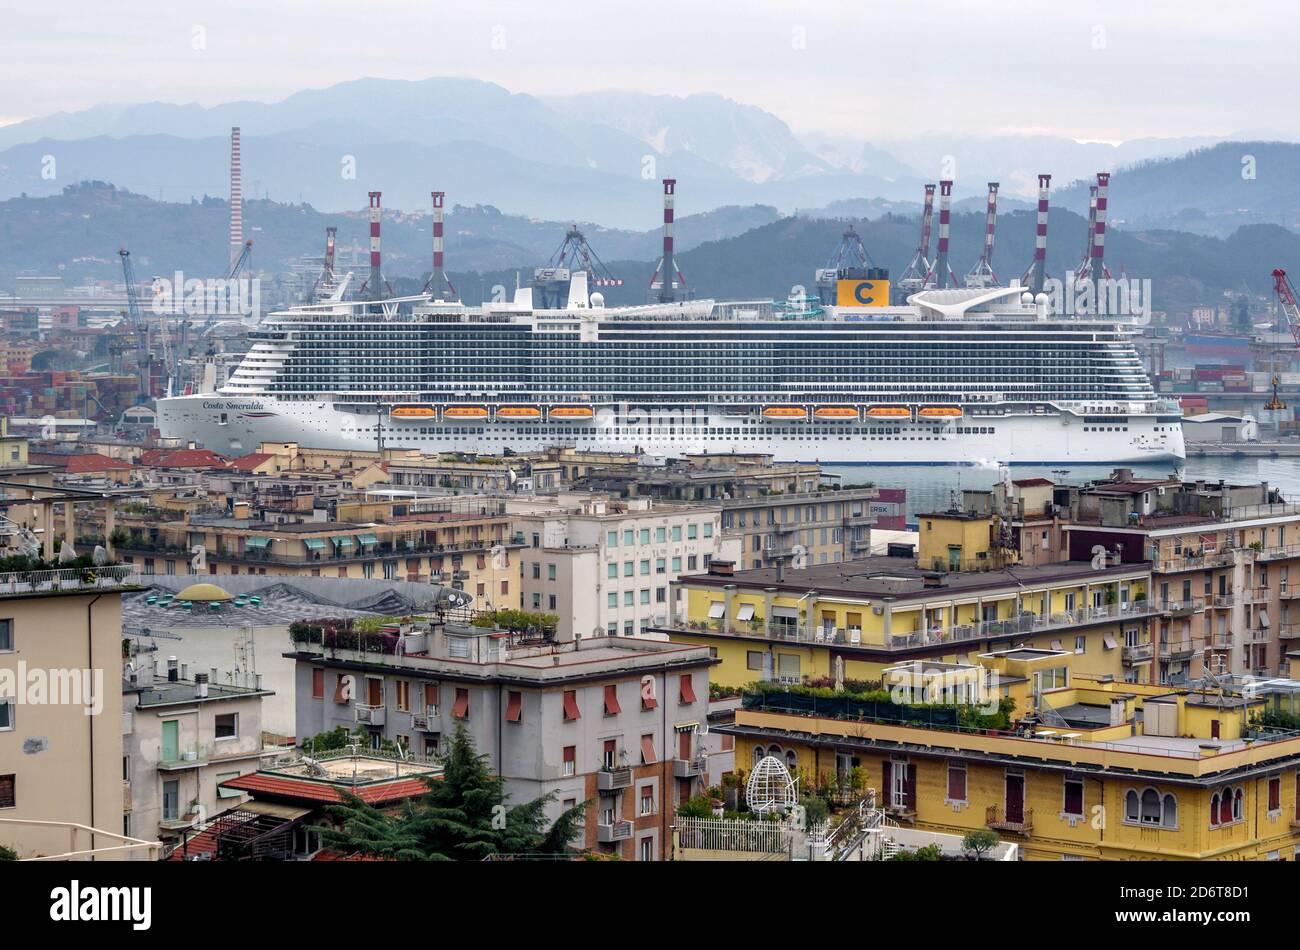 LA SPEZIA, ITALIE – 03 JANVIER 2020 : Costa Smeralda, navire amiral de la flotte Costa, dans le port de la Spezia Banque D'Images